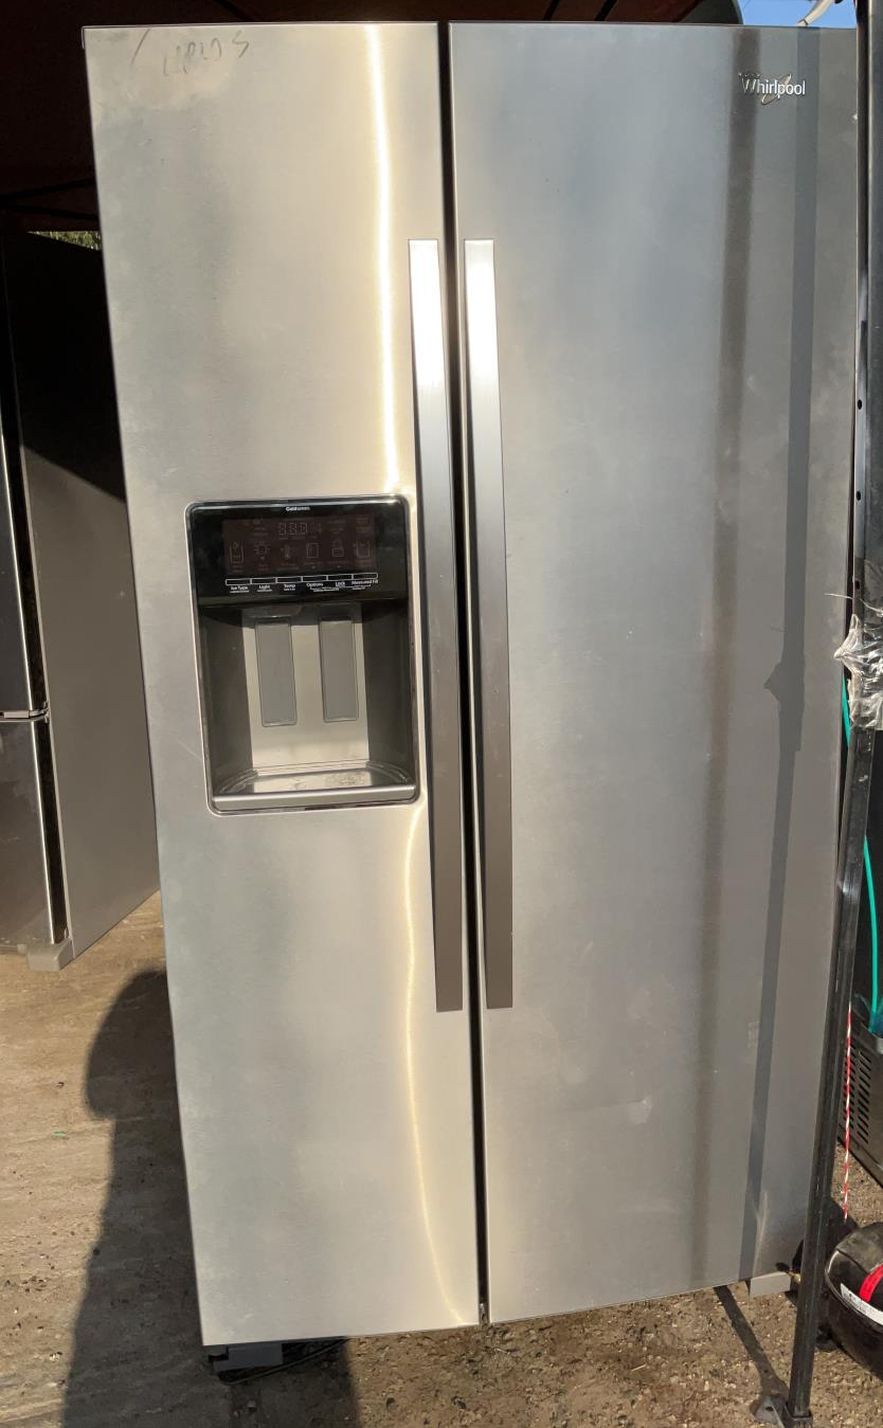 Whirlpool Side-by-Side Stainless Steel Refrigerator Fridge
